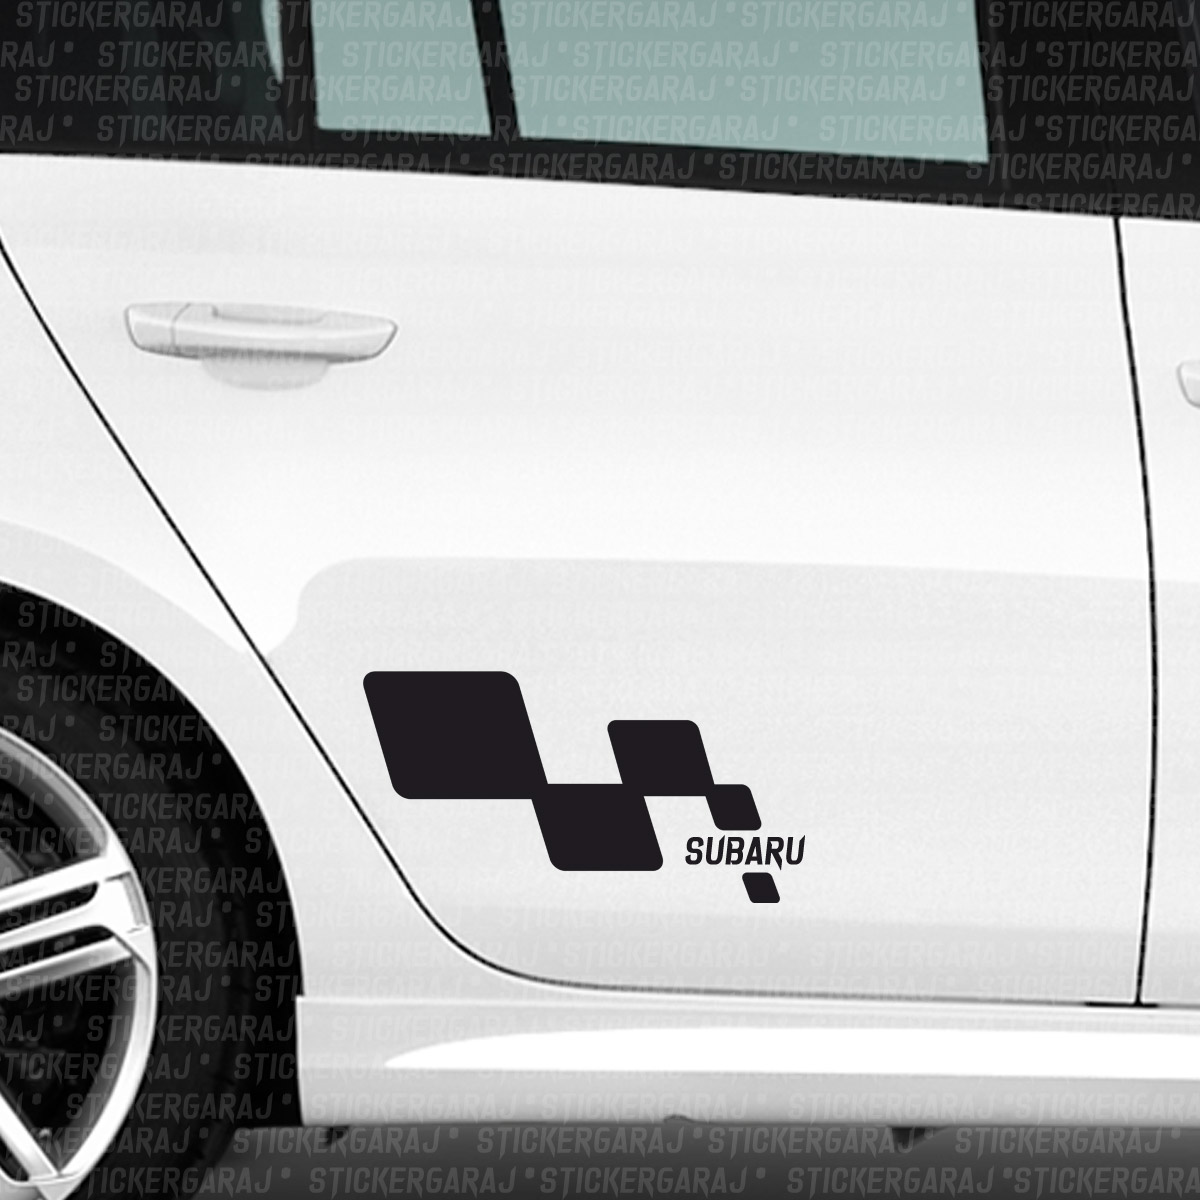 Subaru sticker aksesuar - Subaru Sticker Yan Kapı aksesuar